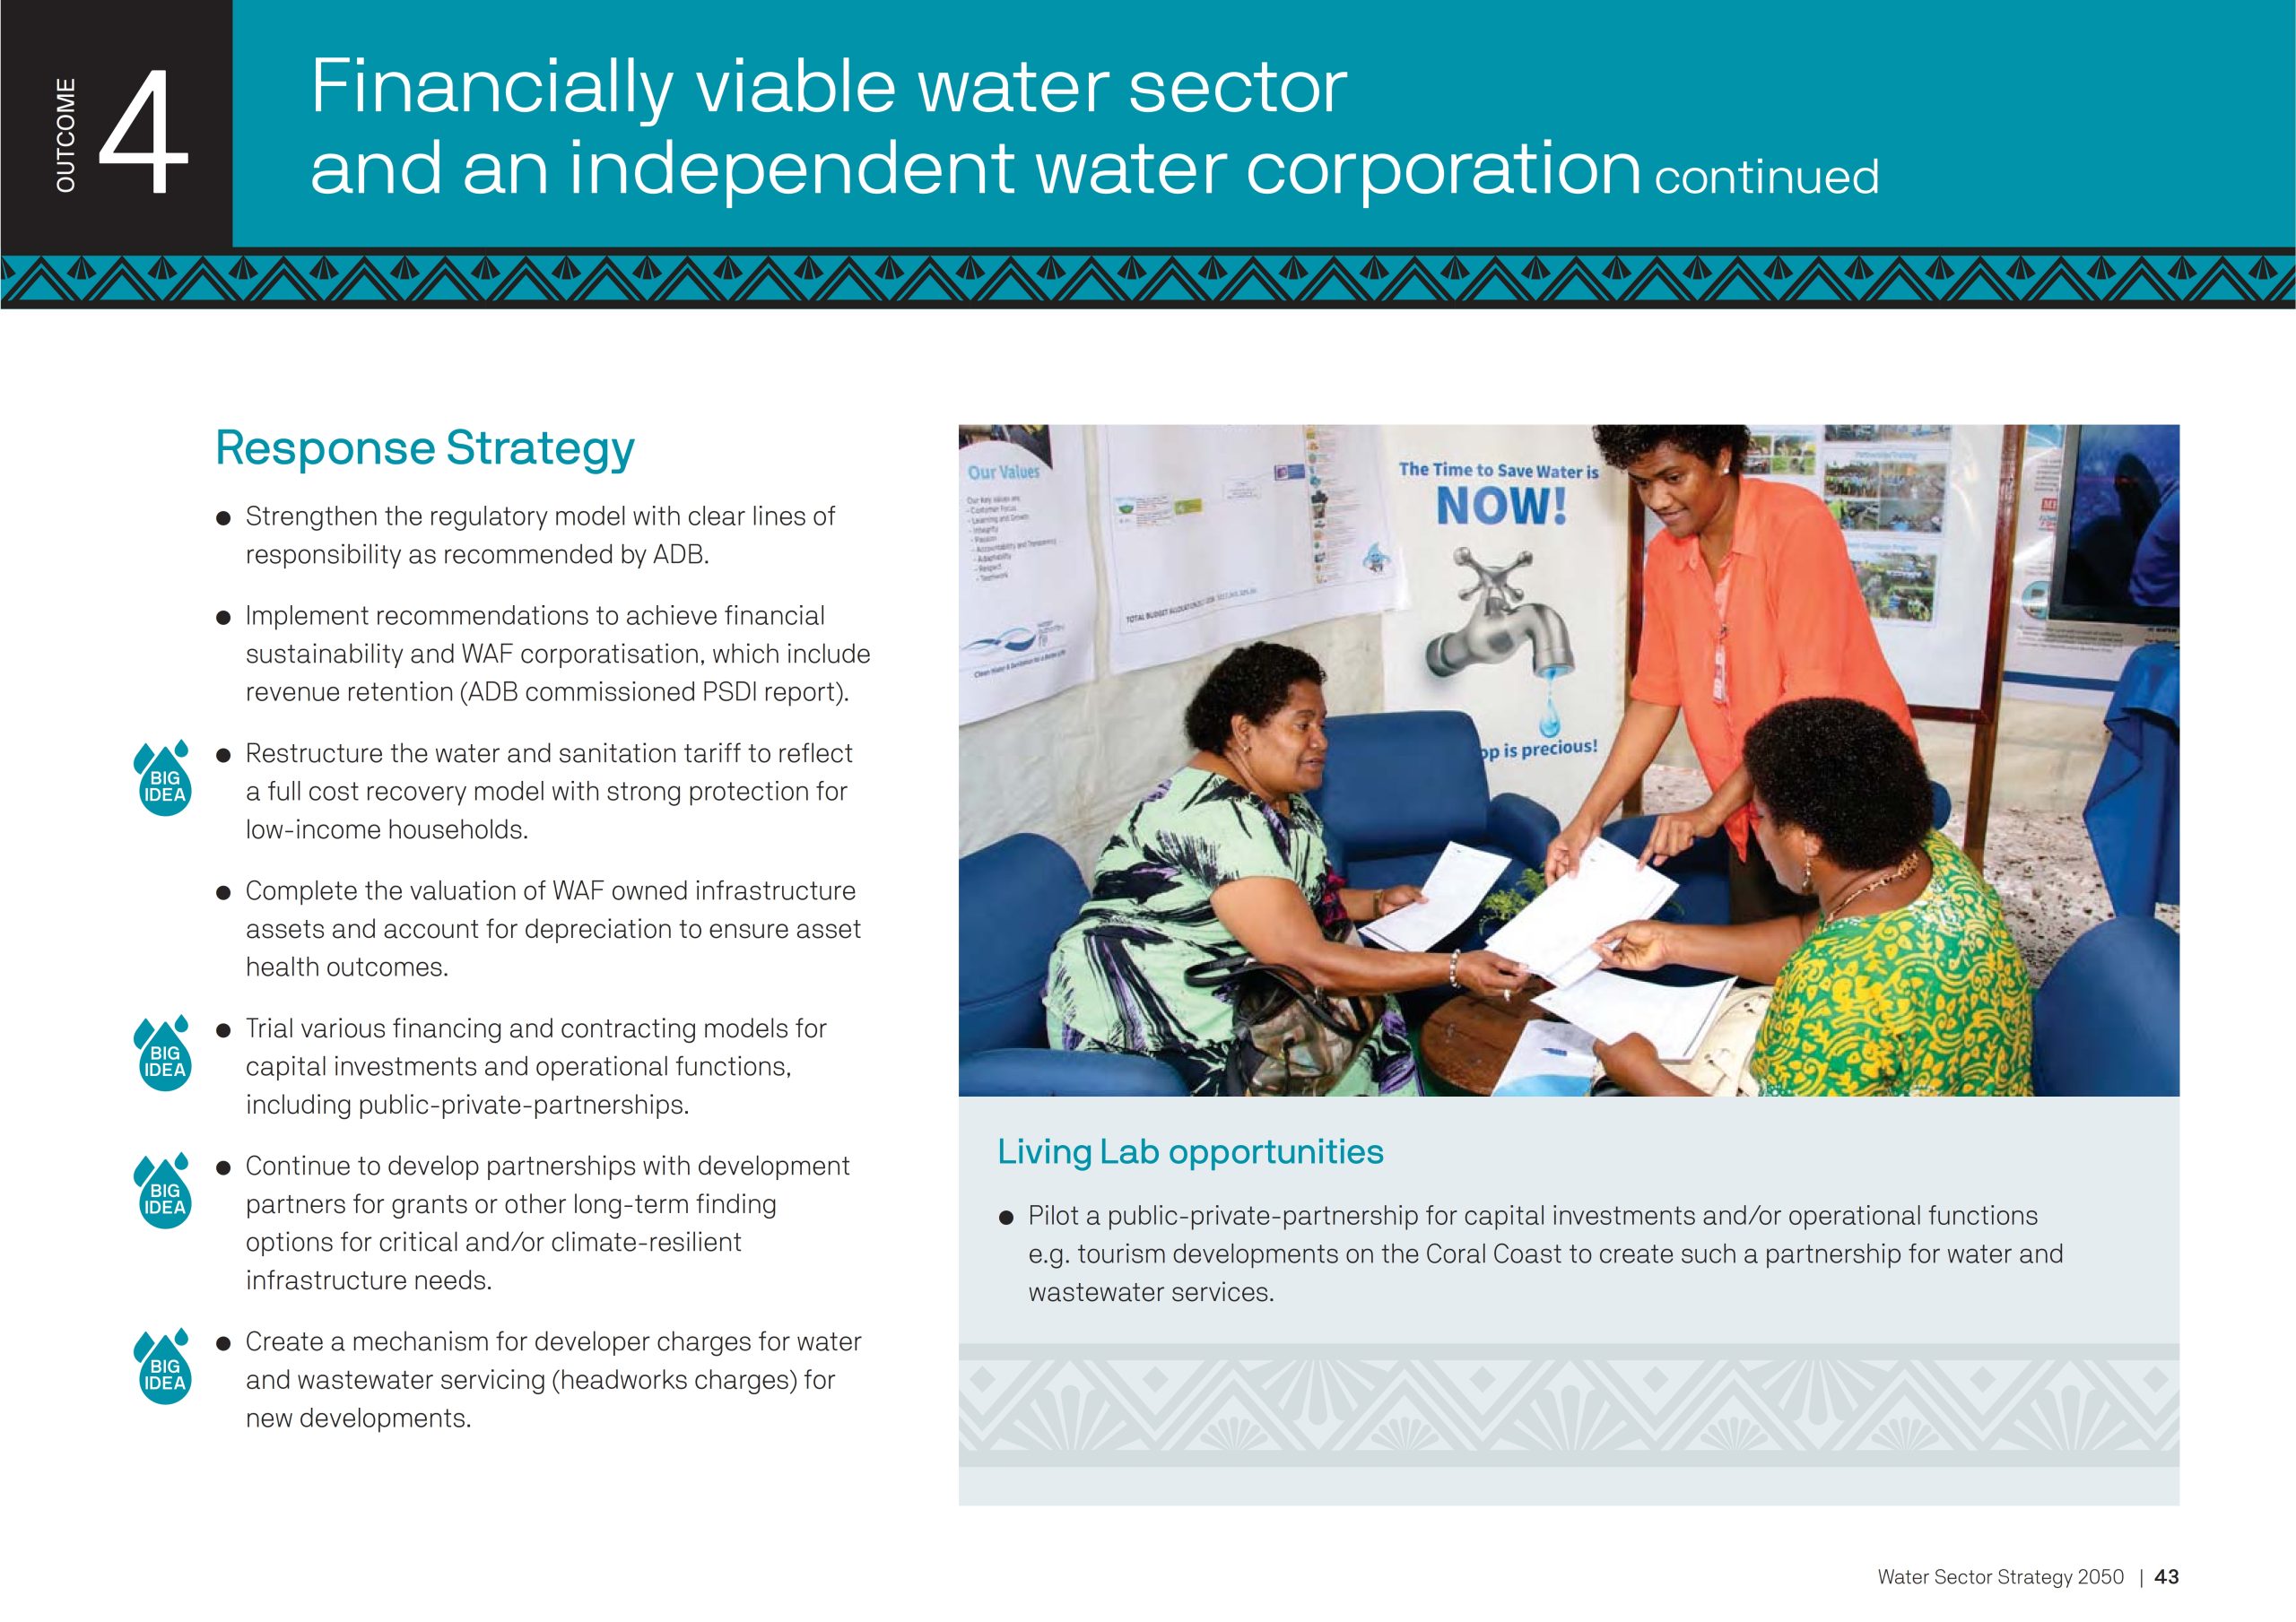 Fiji-Water-Sector-Strategy-2050_043